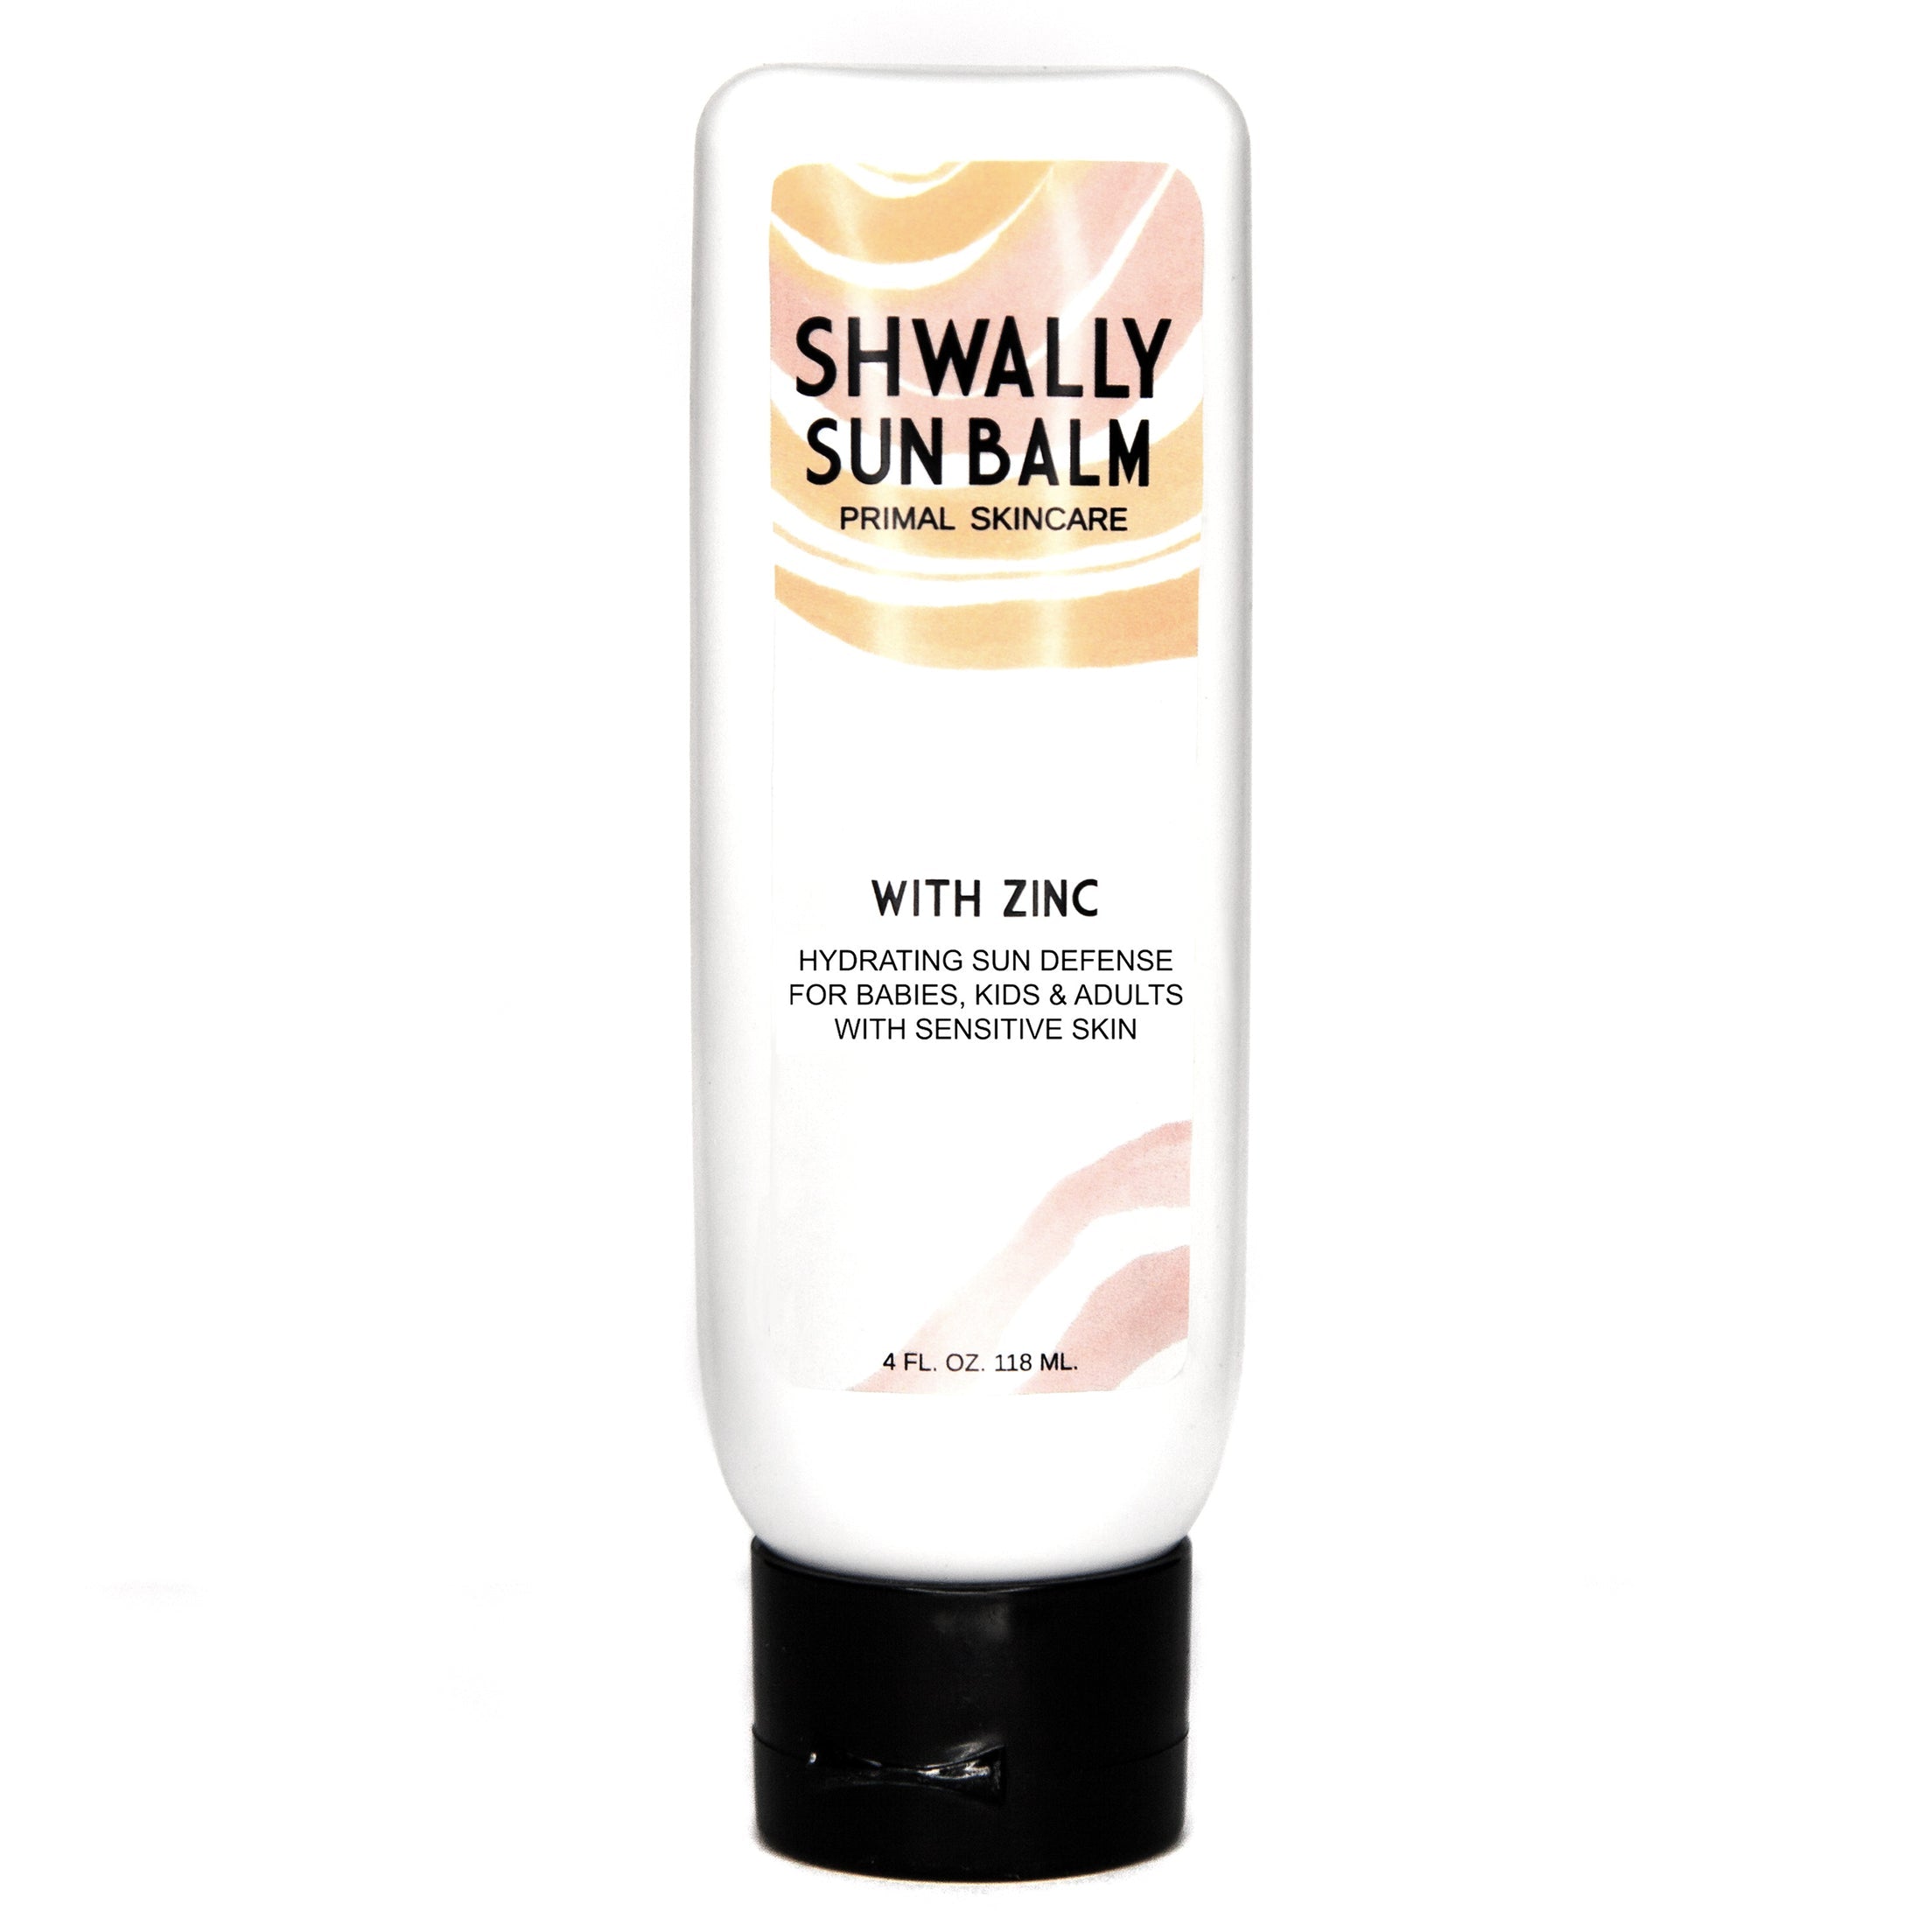 Shwally Zinc & Avocado Mineral SunBalm Shwally - For Home and Play